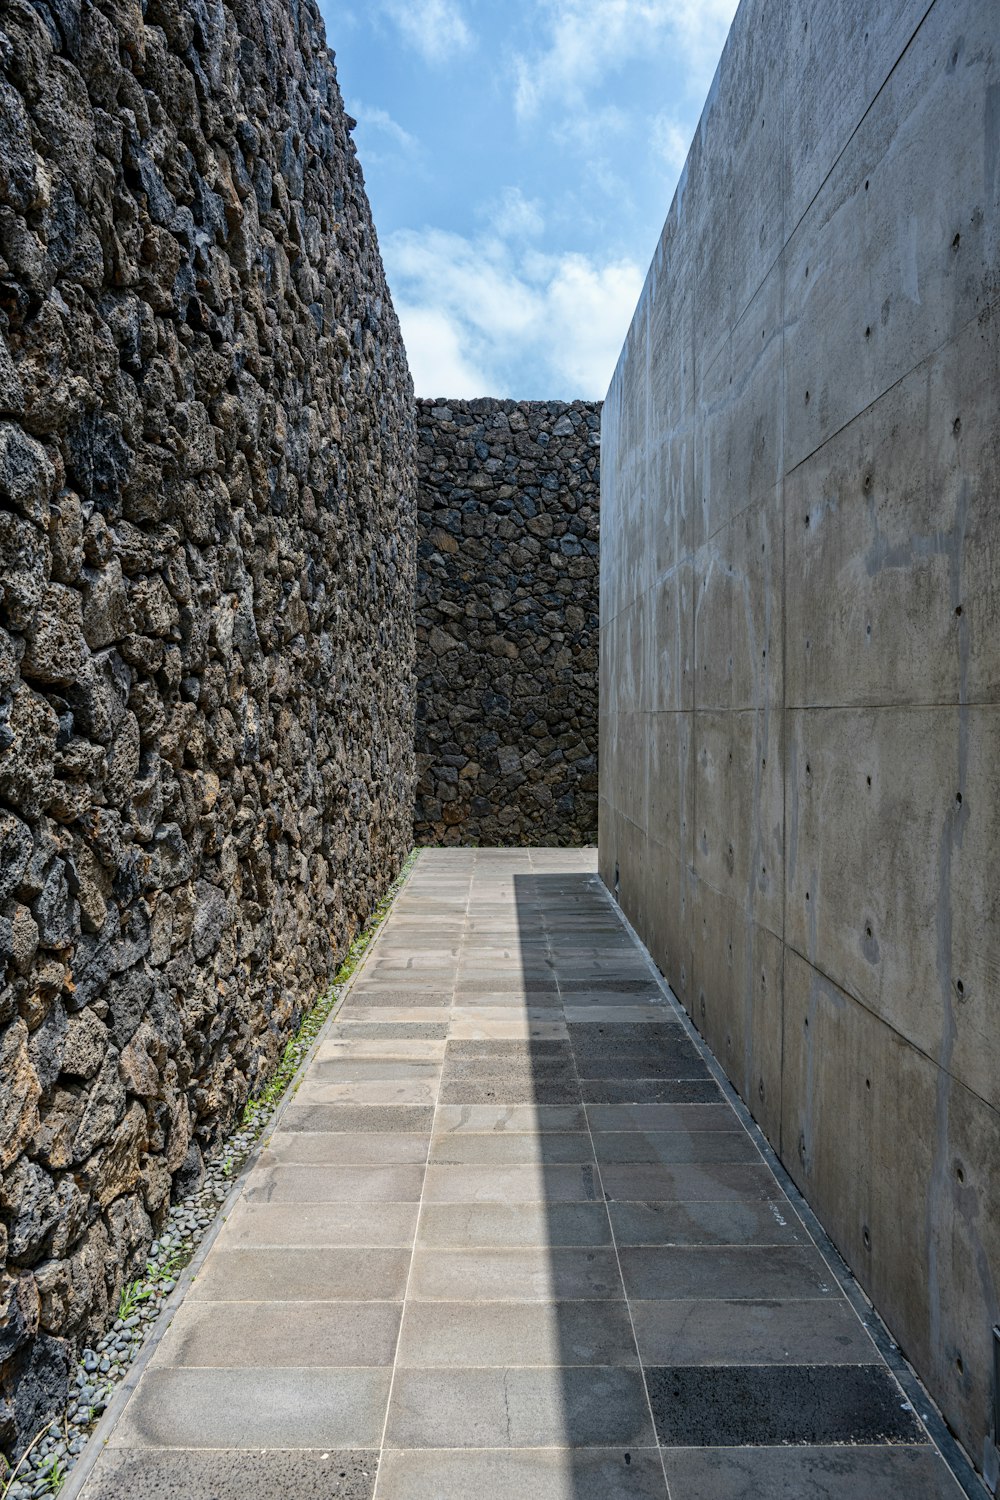 a stone walkway between stone walls